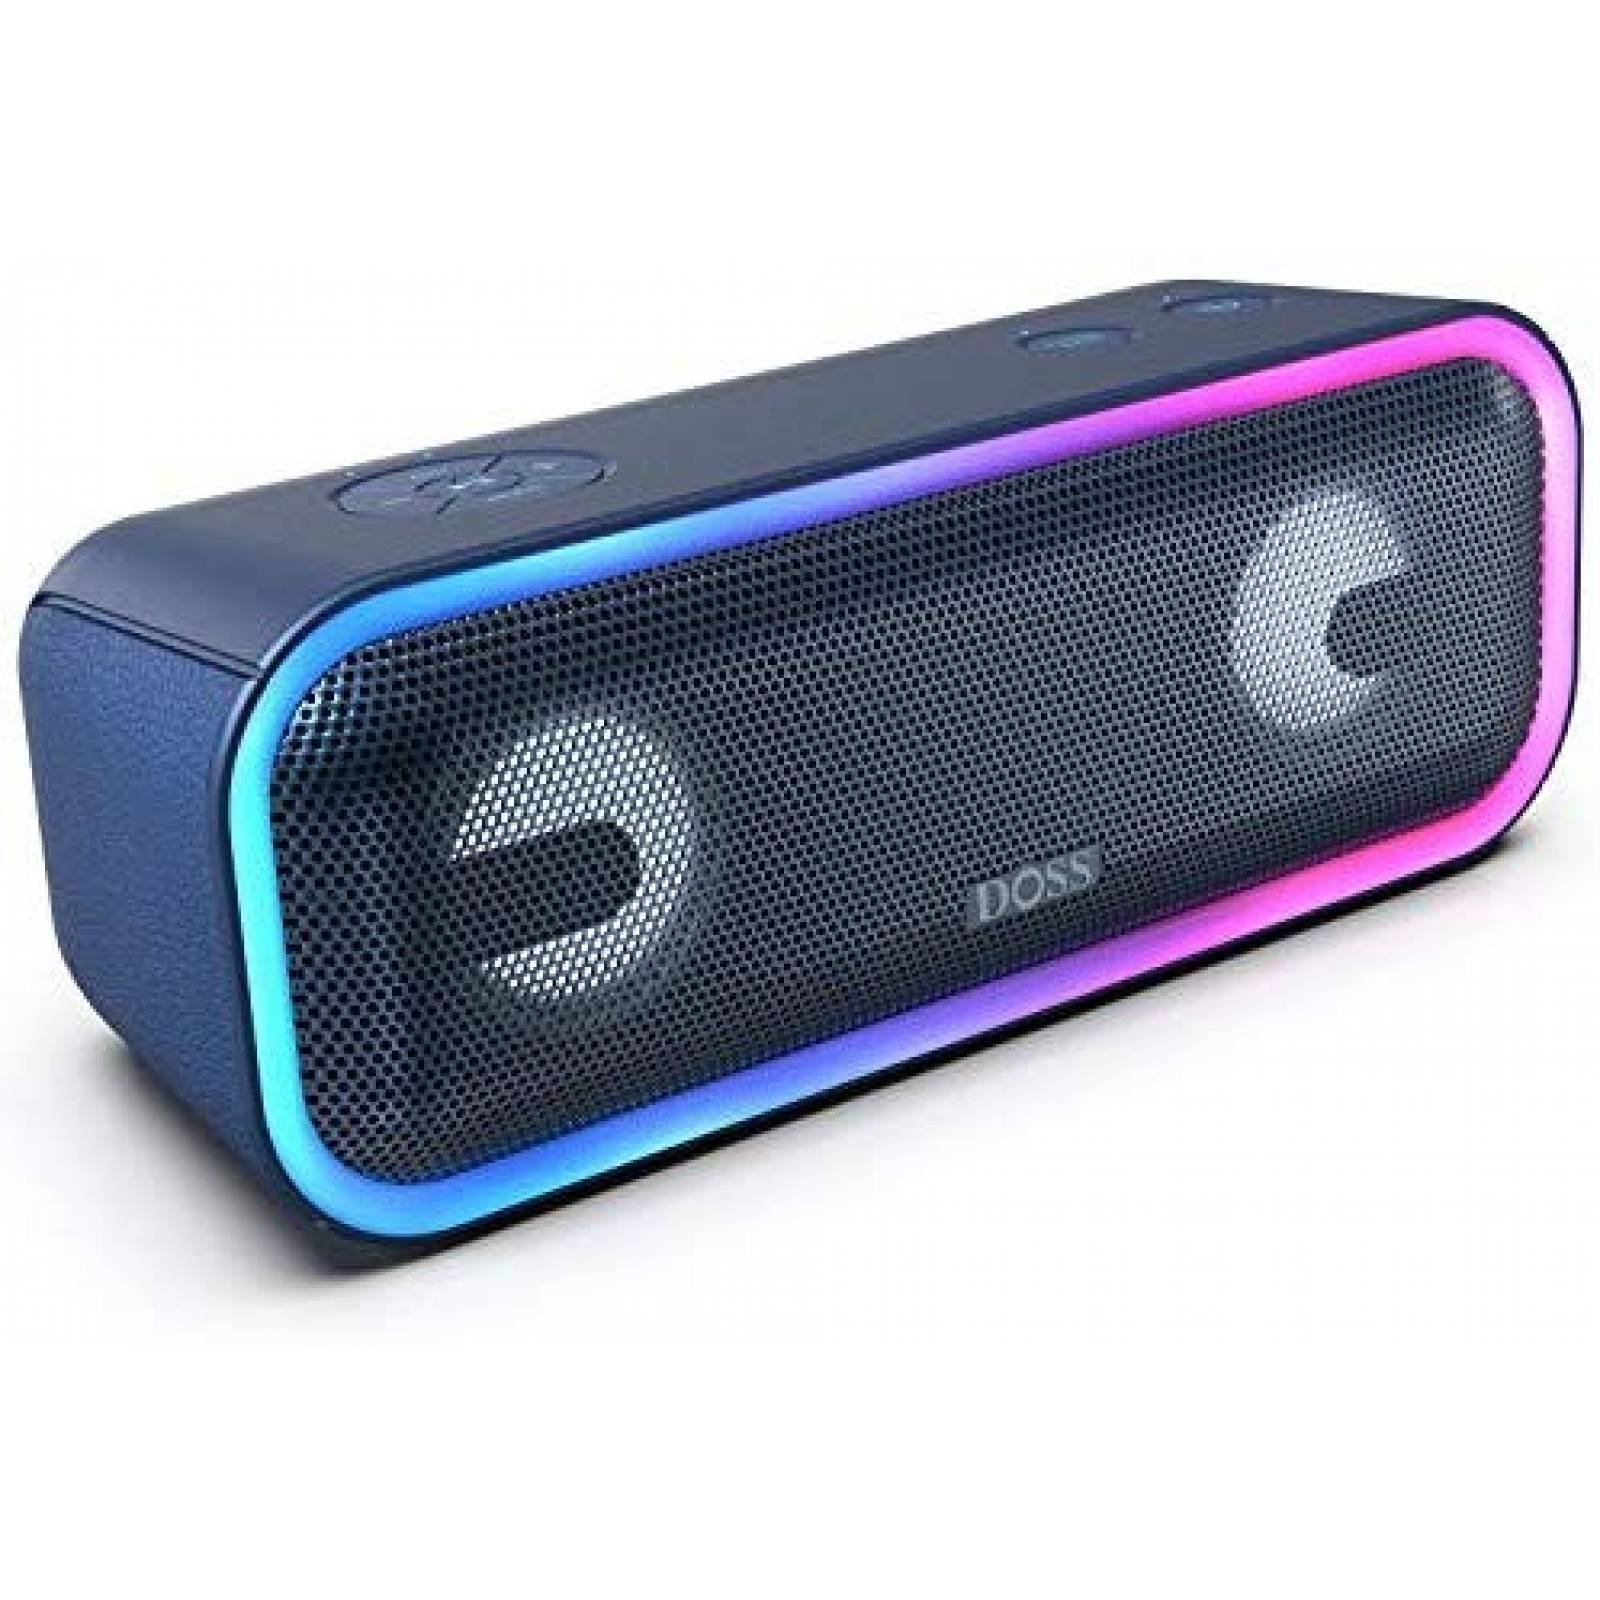 Bocina DOSS SoundBox Pro+ 24W 15hrs Bluetooth IPX5 -Azul